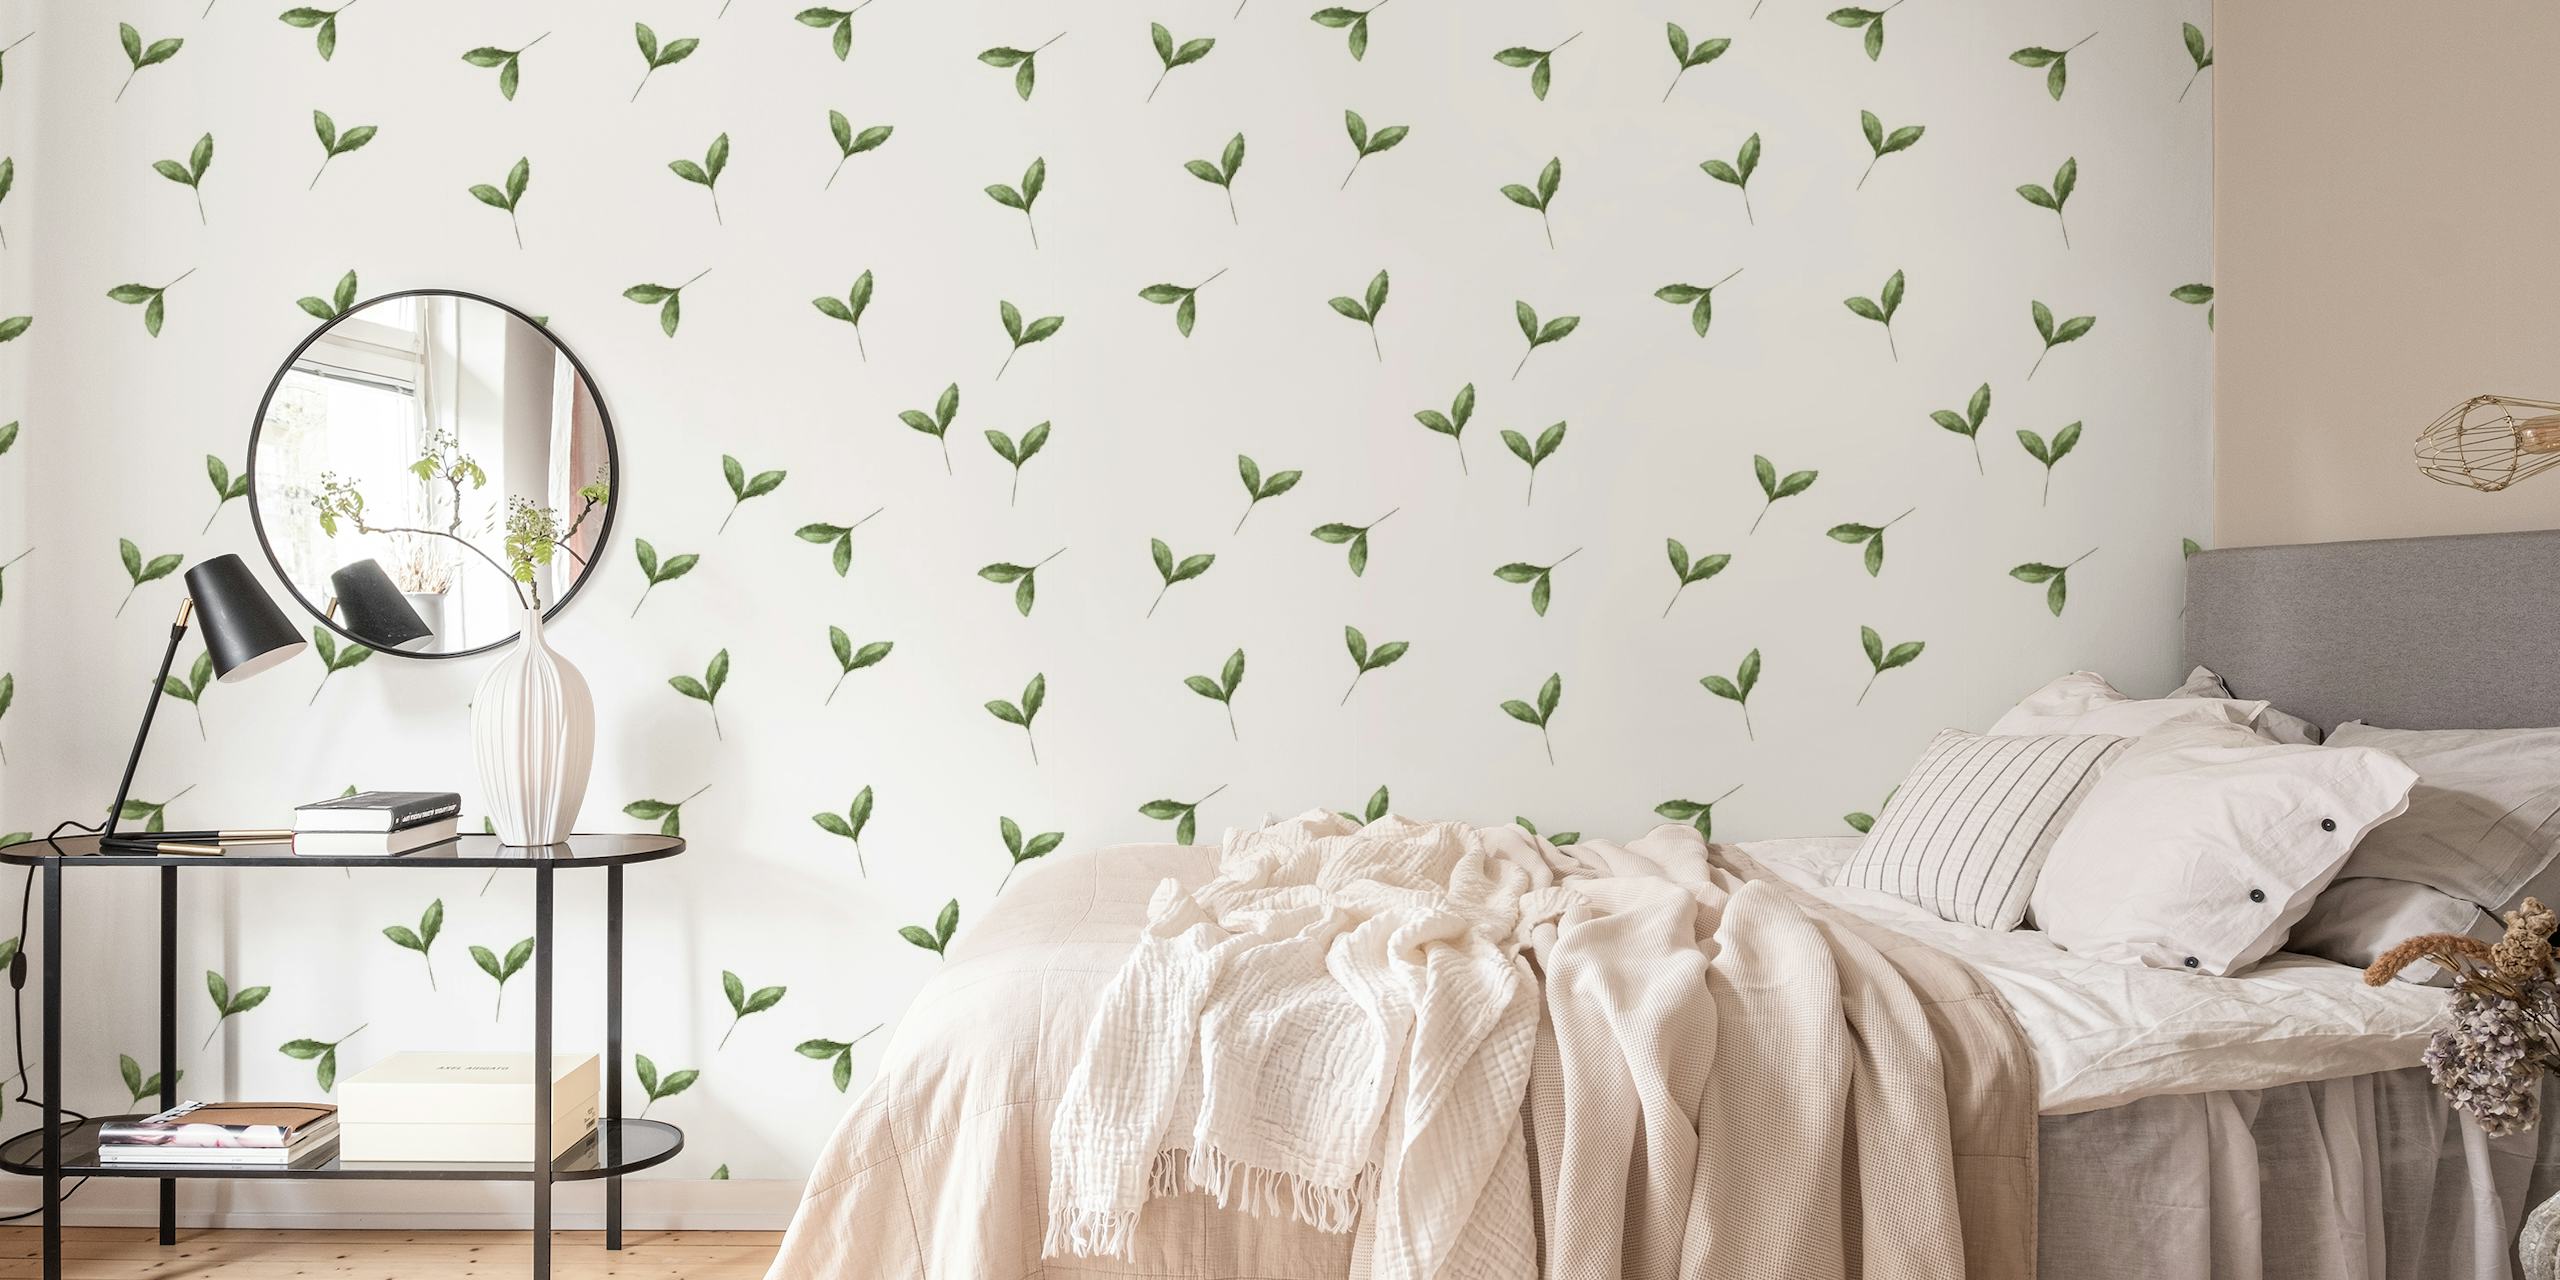 Romantic handrawn leaves wallpaper